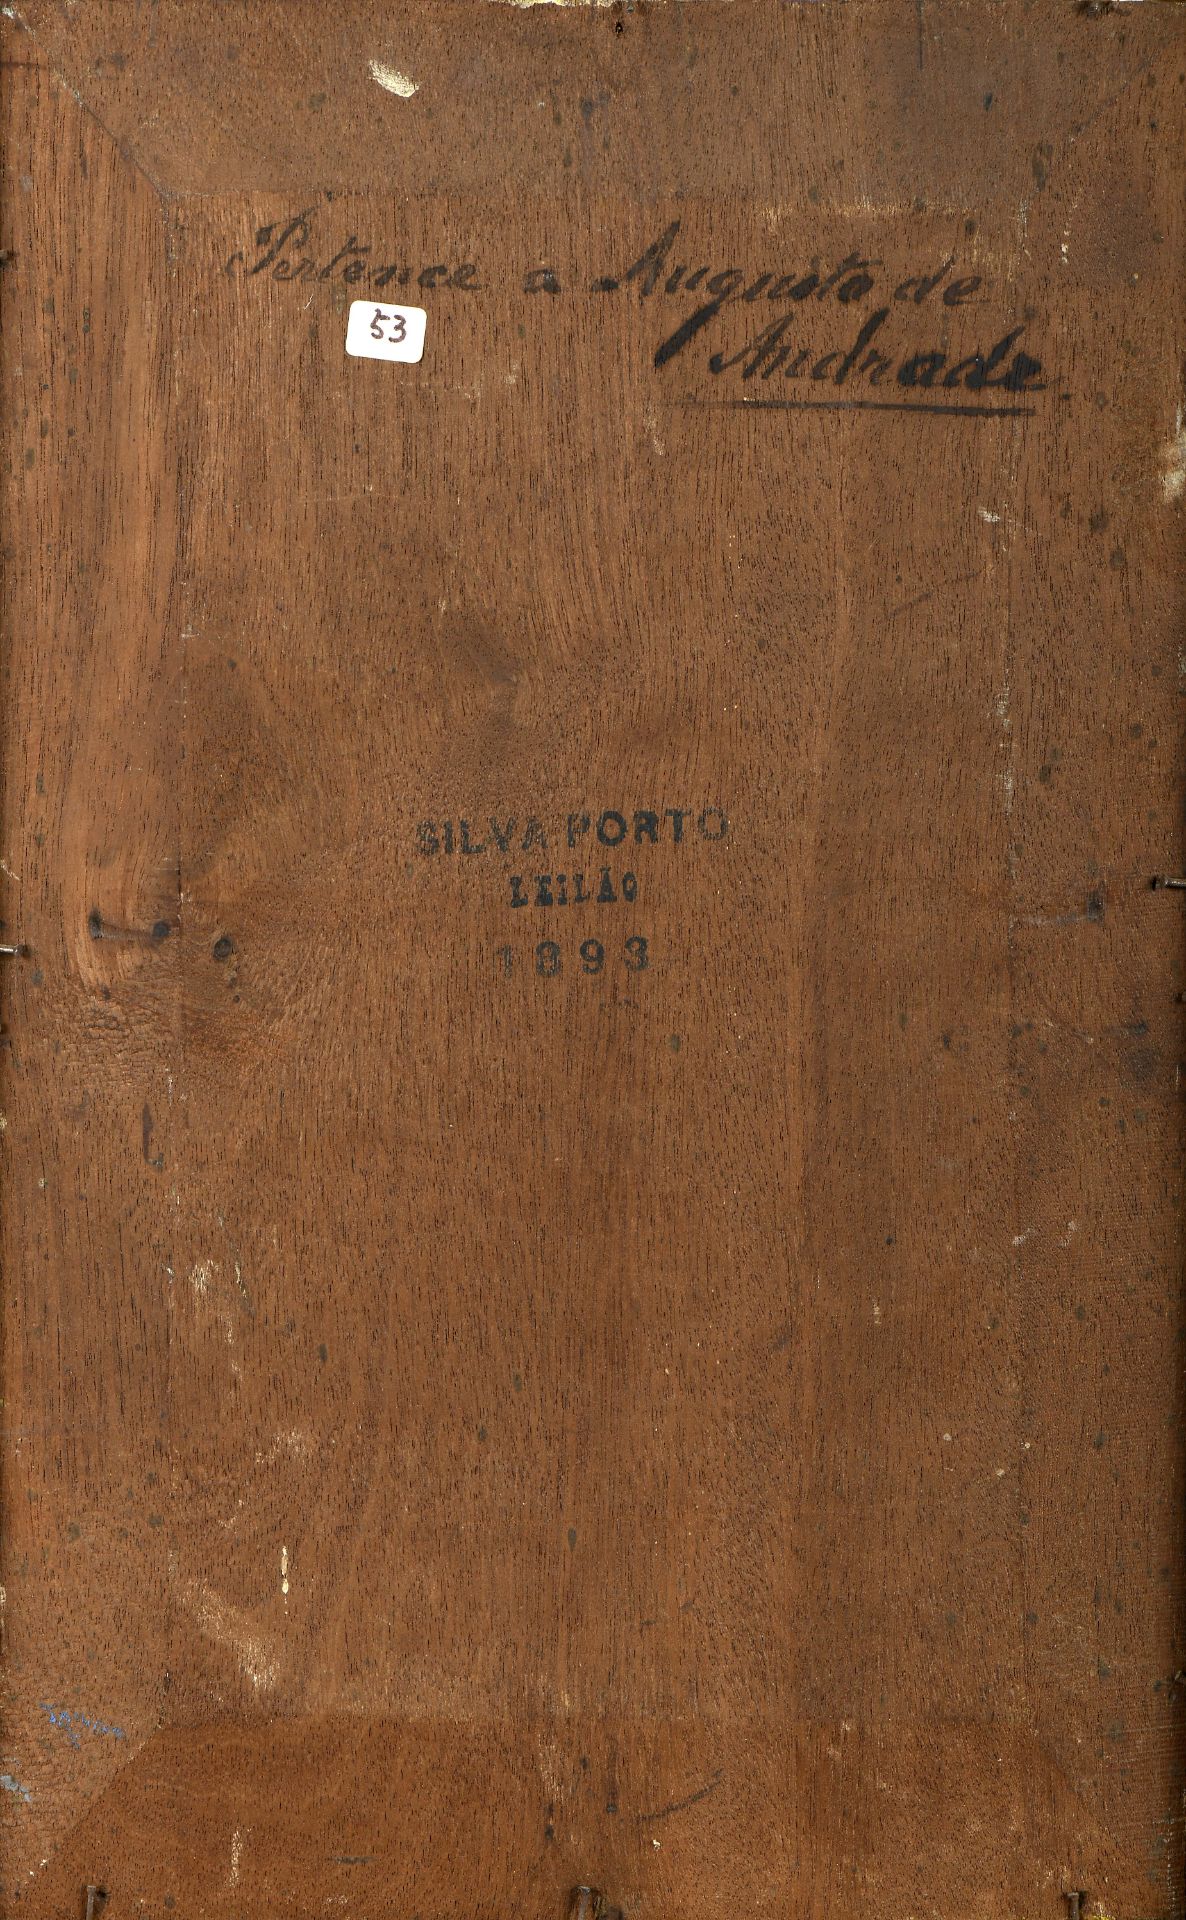 SILVA PORTO - 1850-1893 - Bild 4 aus 4